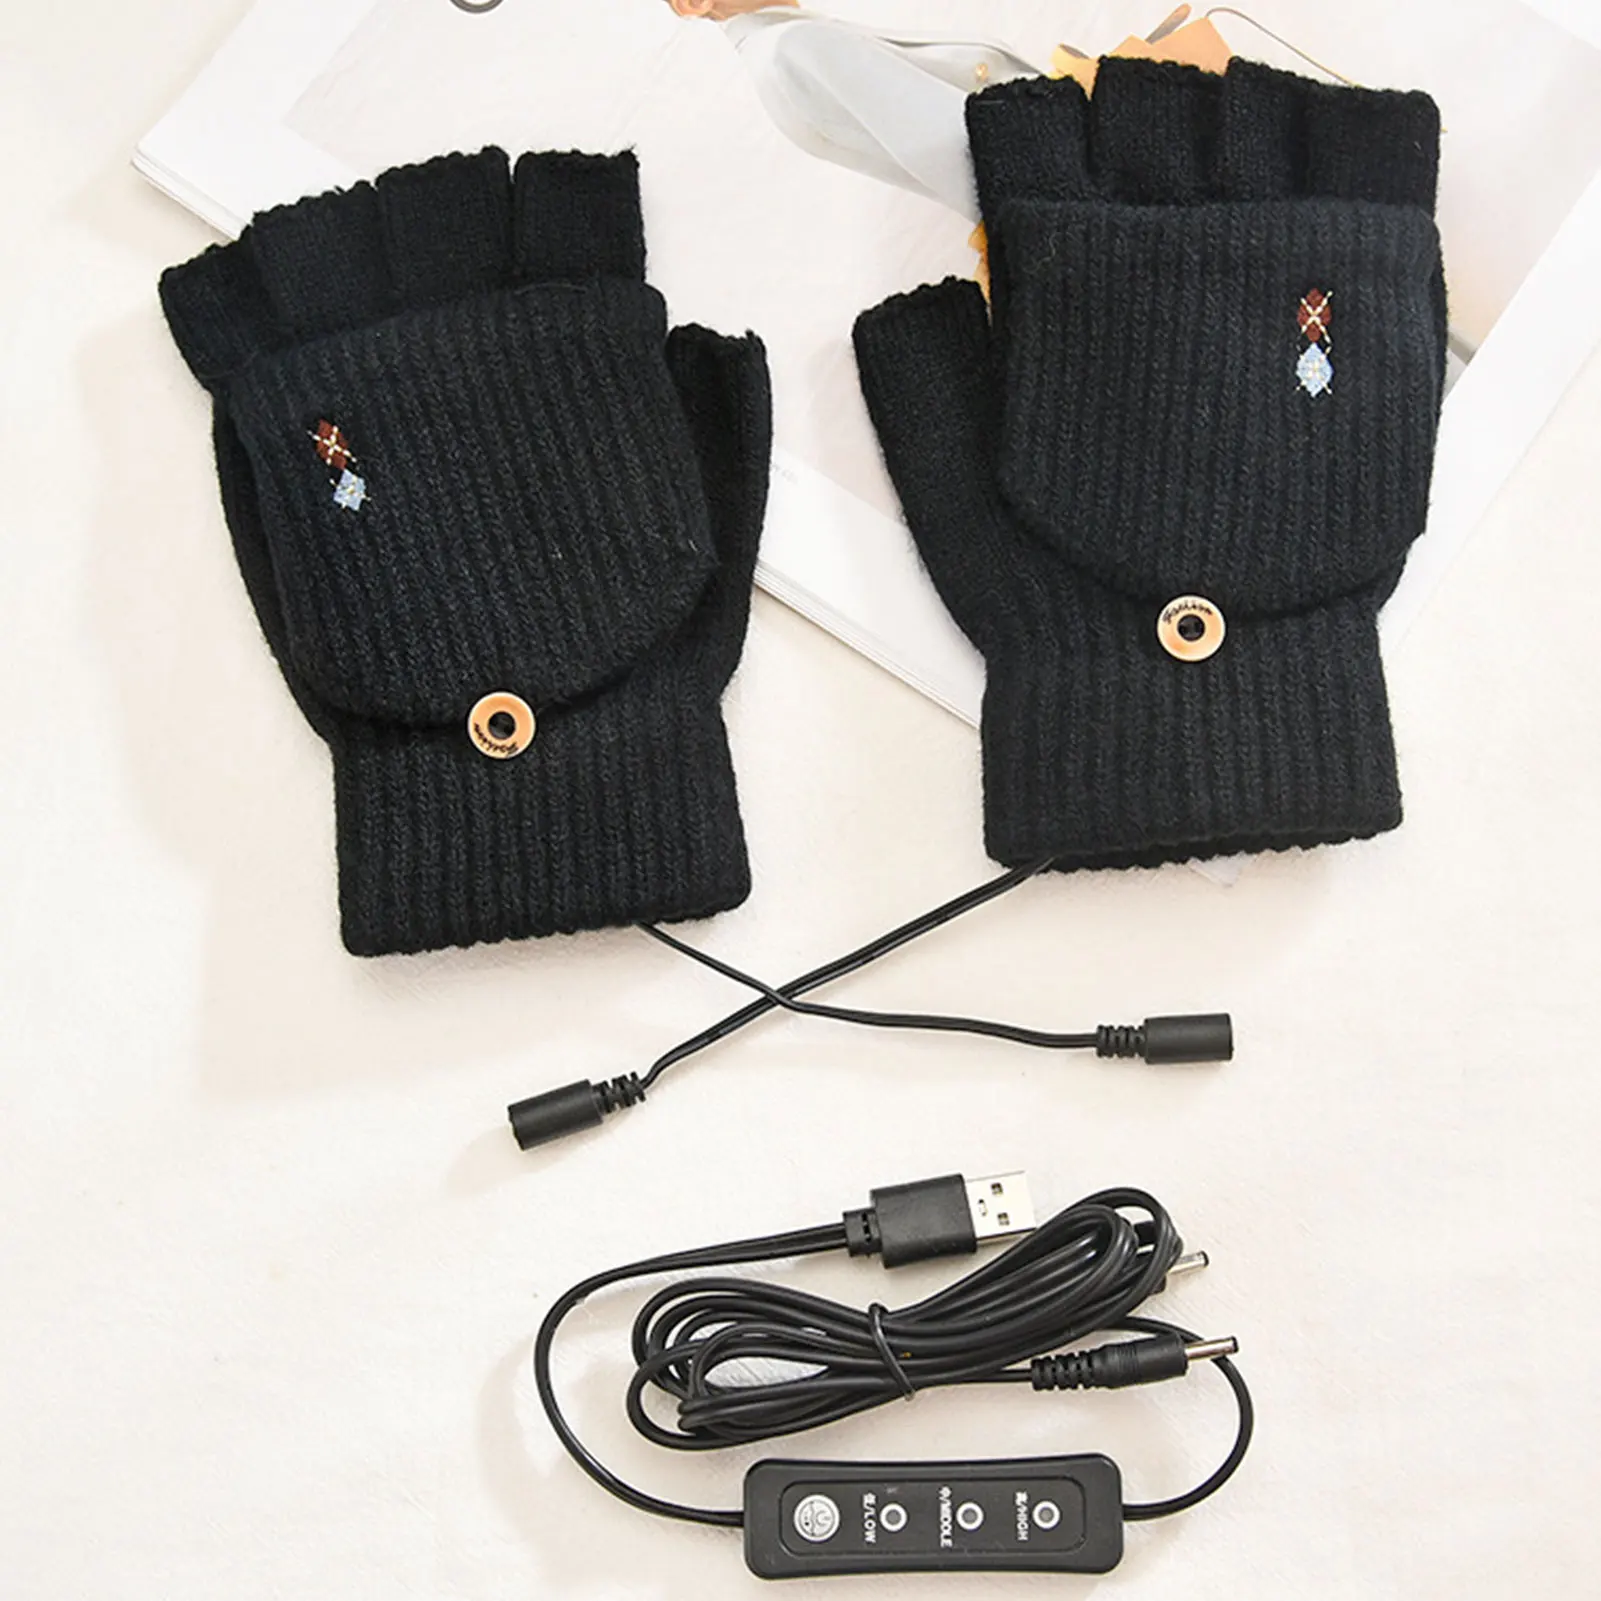 

USB Heating Knitting Hands Warmer Adjustable Temperature Lightweight Heating Mittens for Indoor Office Work Typing FS99